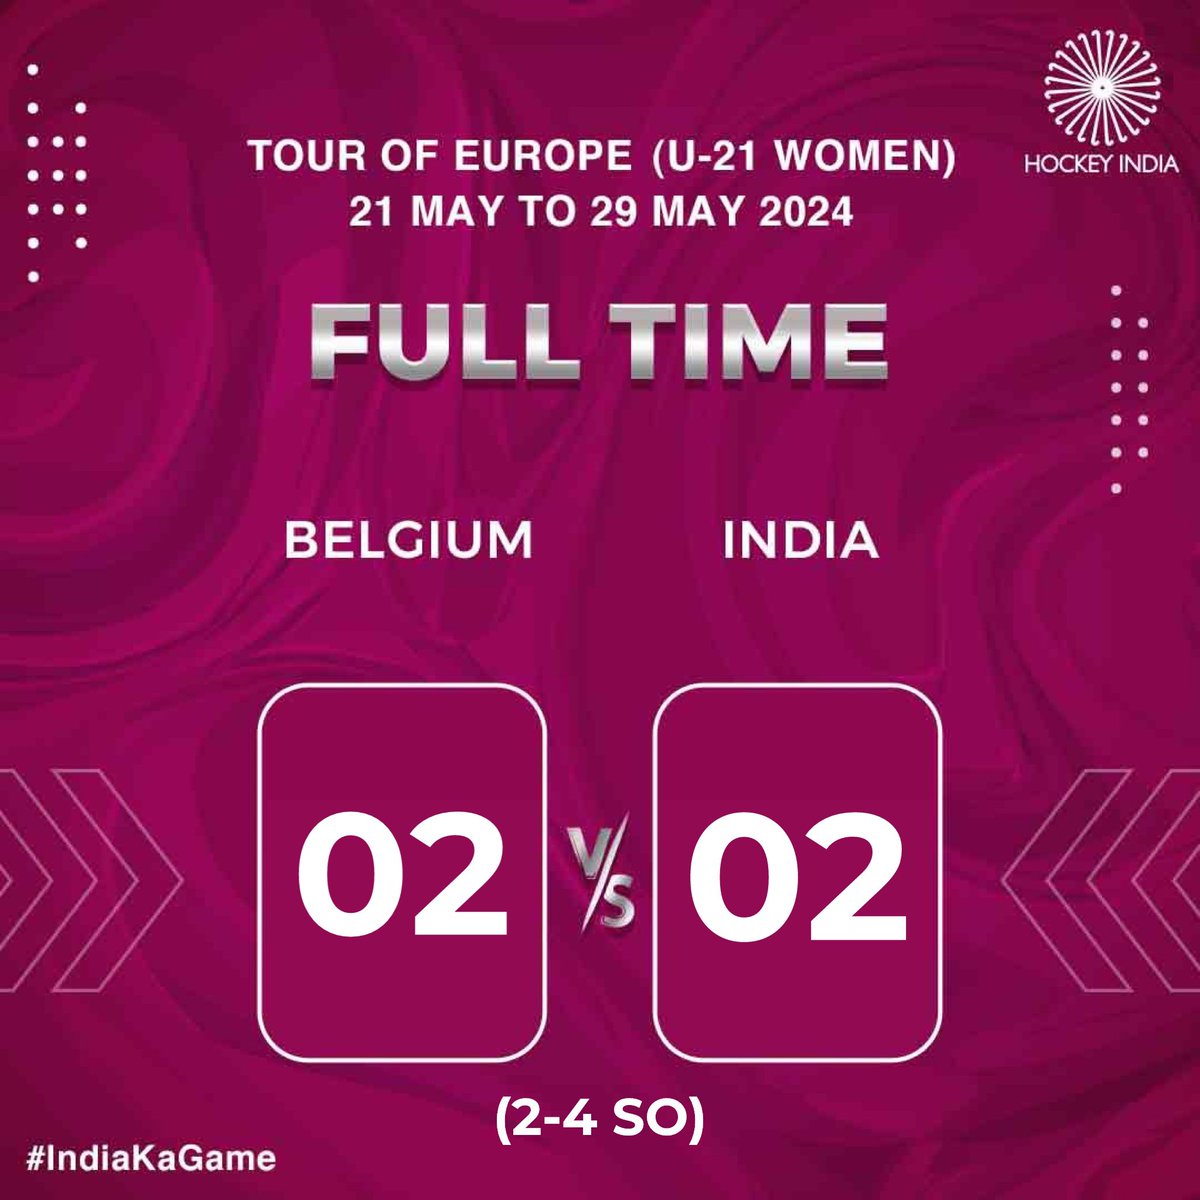 What a match! India Jr. Women’s Hockey Team showcased some brilliant hockey today 🔥

Belgium 2 - 2 India (2-4 SO)

#HockeyIndia #IndiaKaGame
.
.
.
.
@CMO_Odisha @sports_odisha @IndiaSports @Media_SAI @Limca_Official @CocaCola_Ind